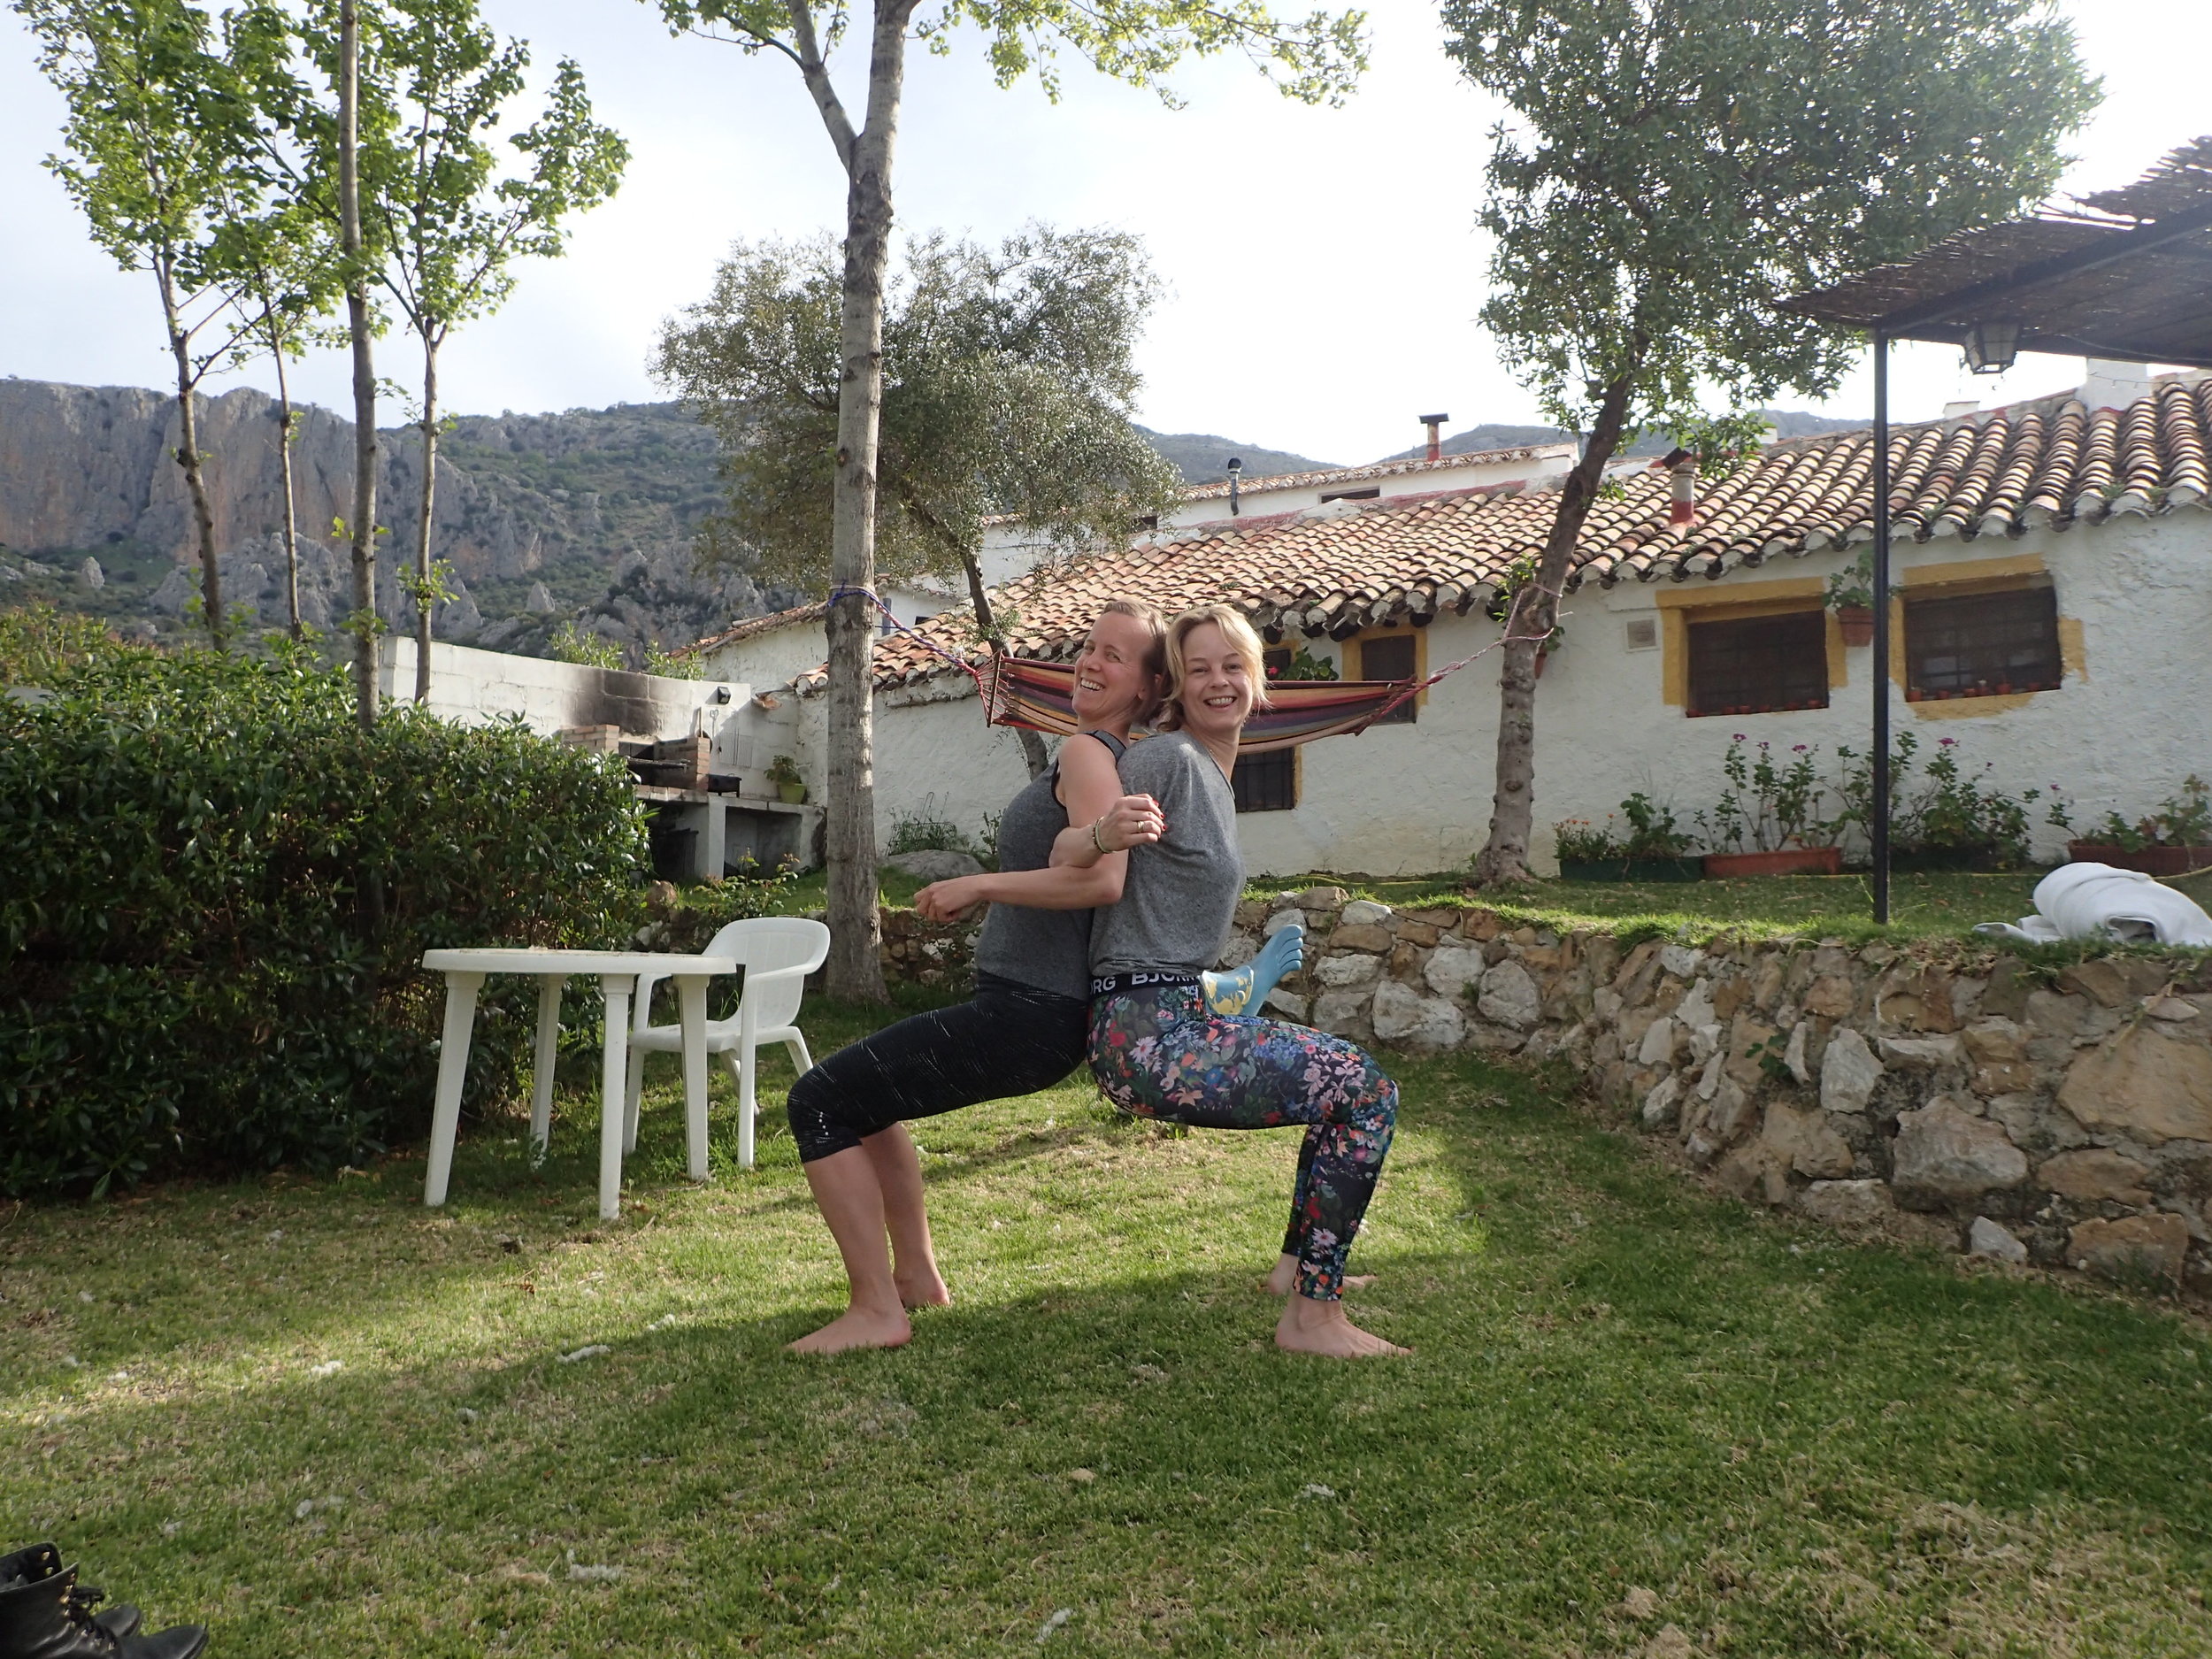 Partner Yoga in garden Yin Yang Yoga retreat Malaga mountains Spain